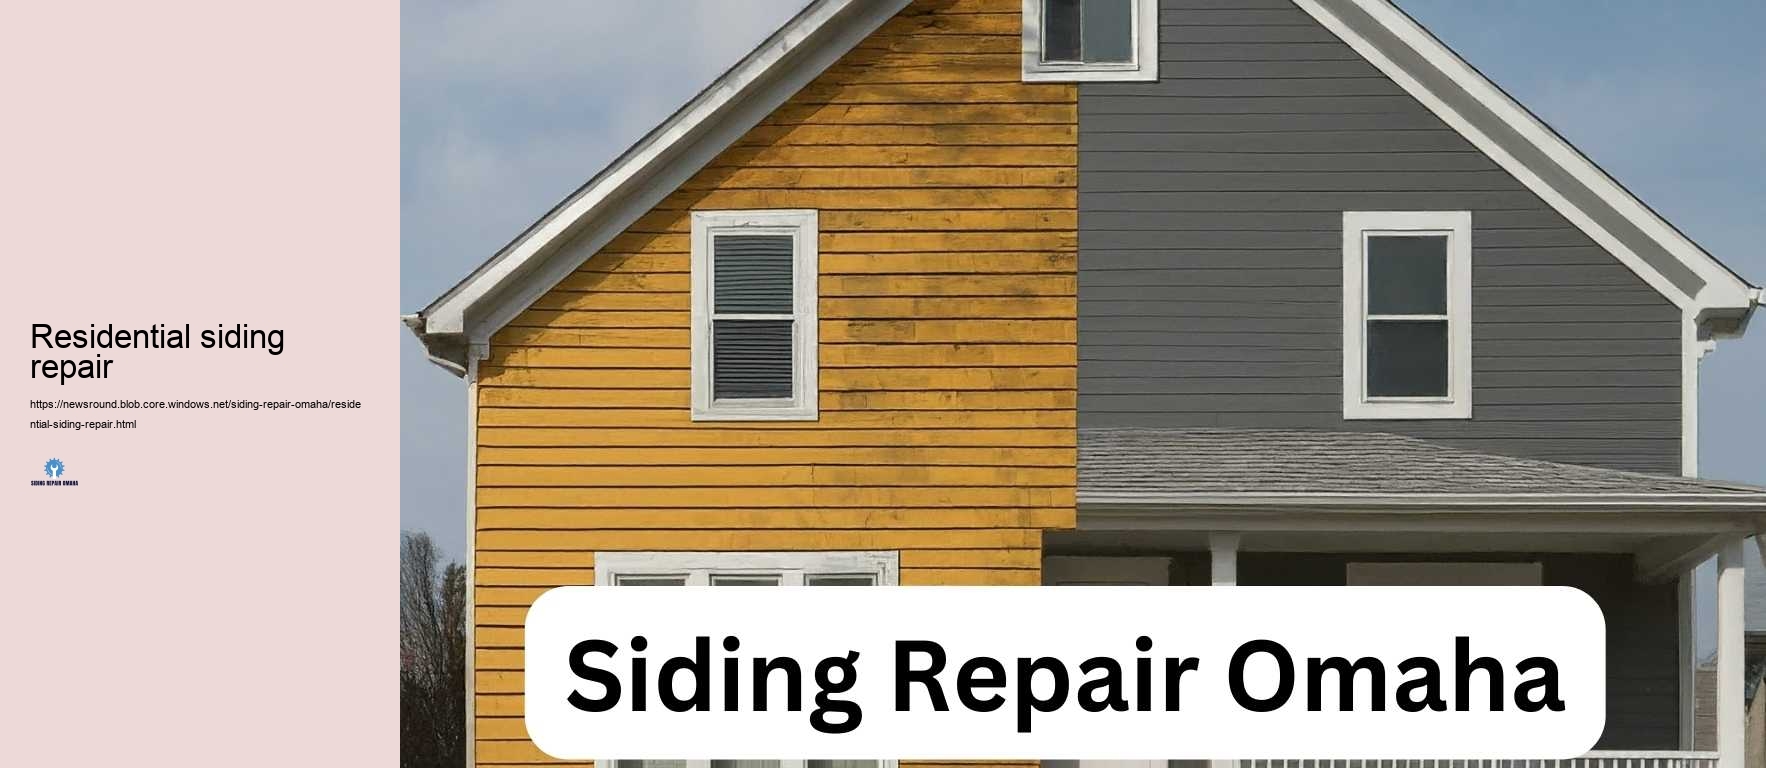 Residential siding repair